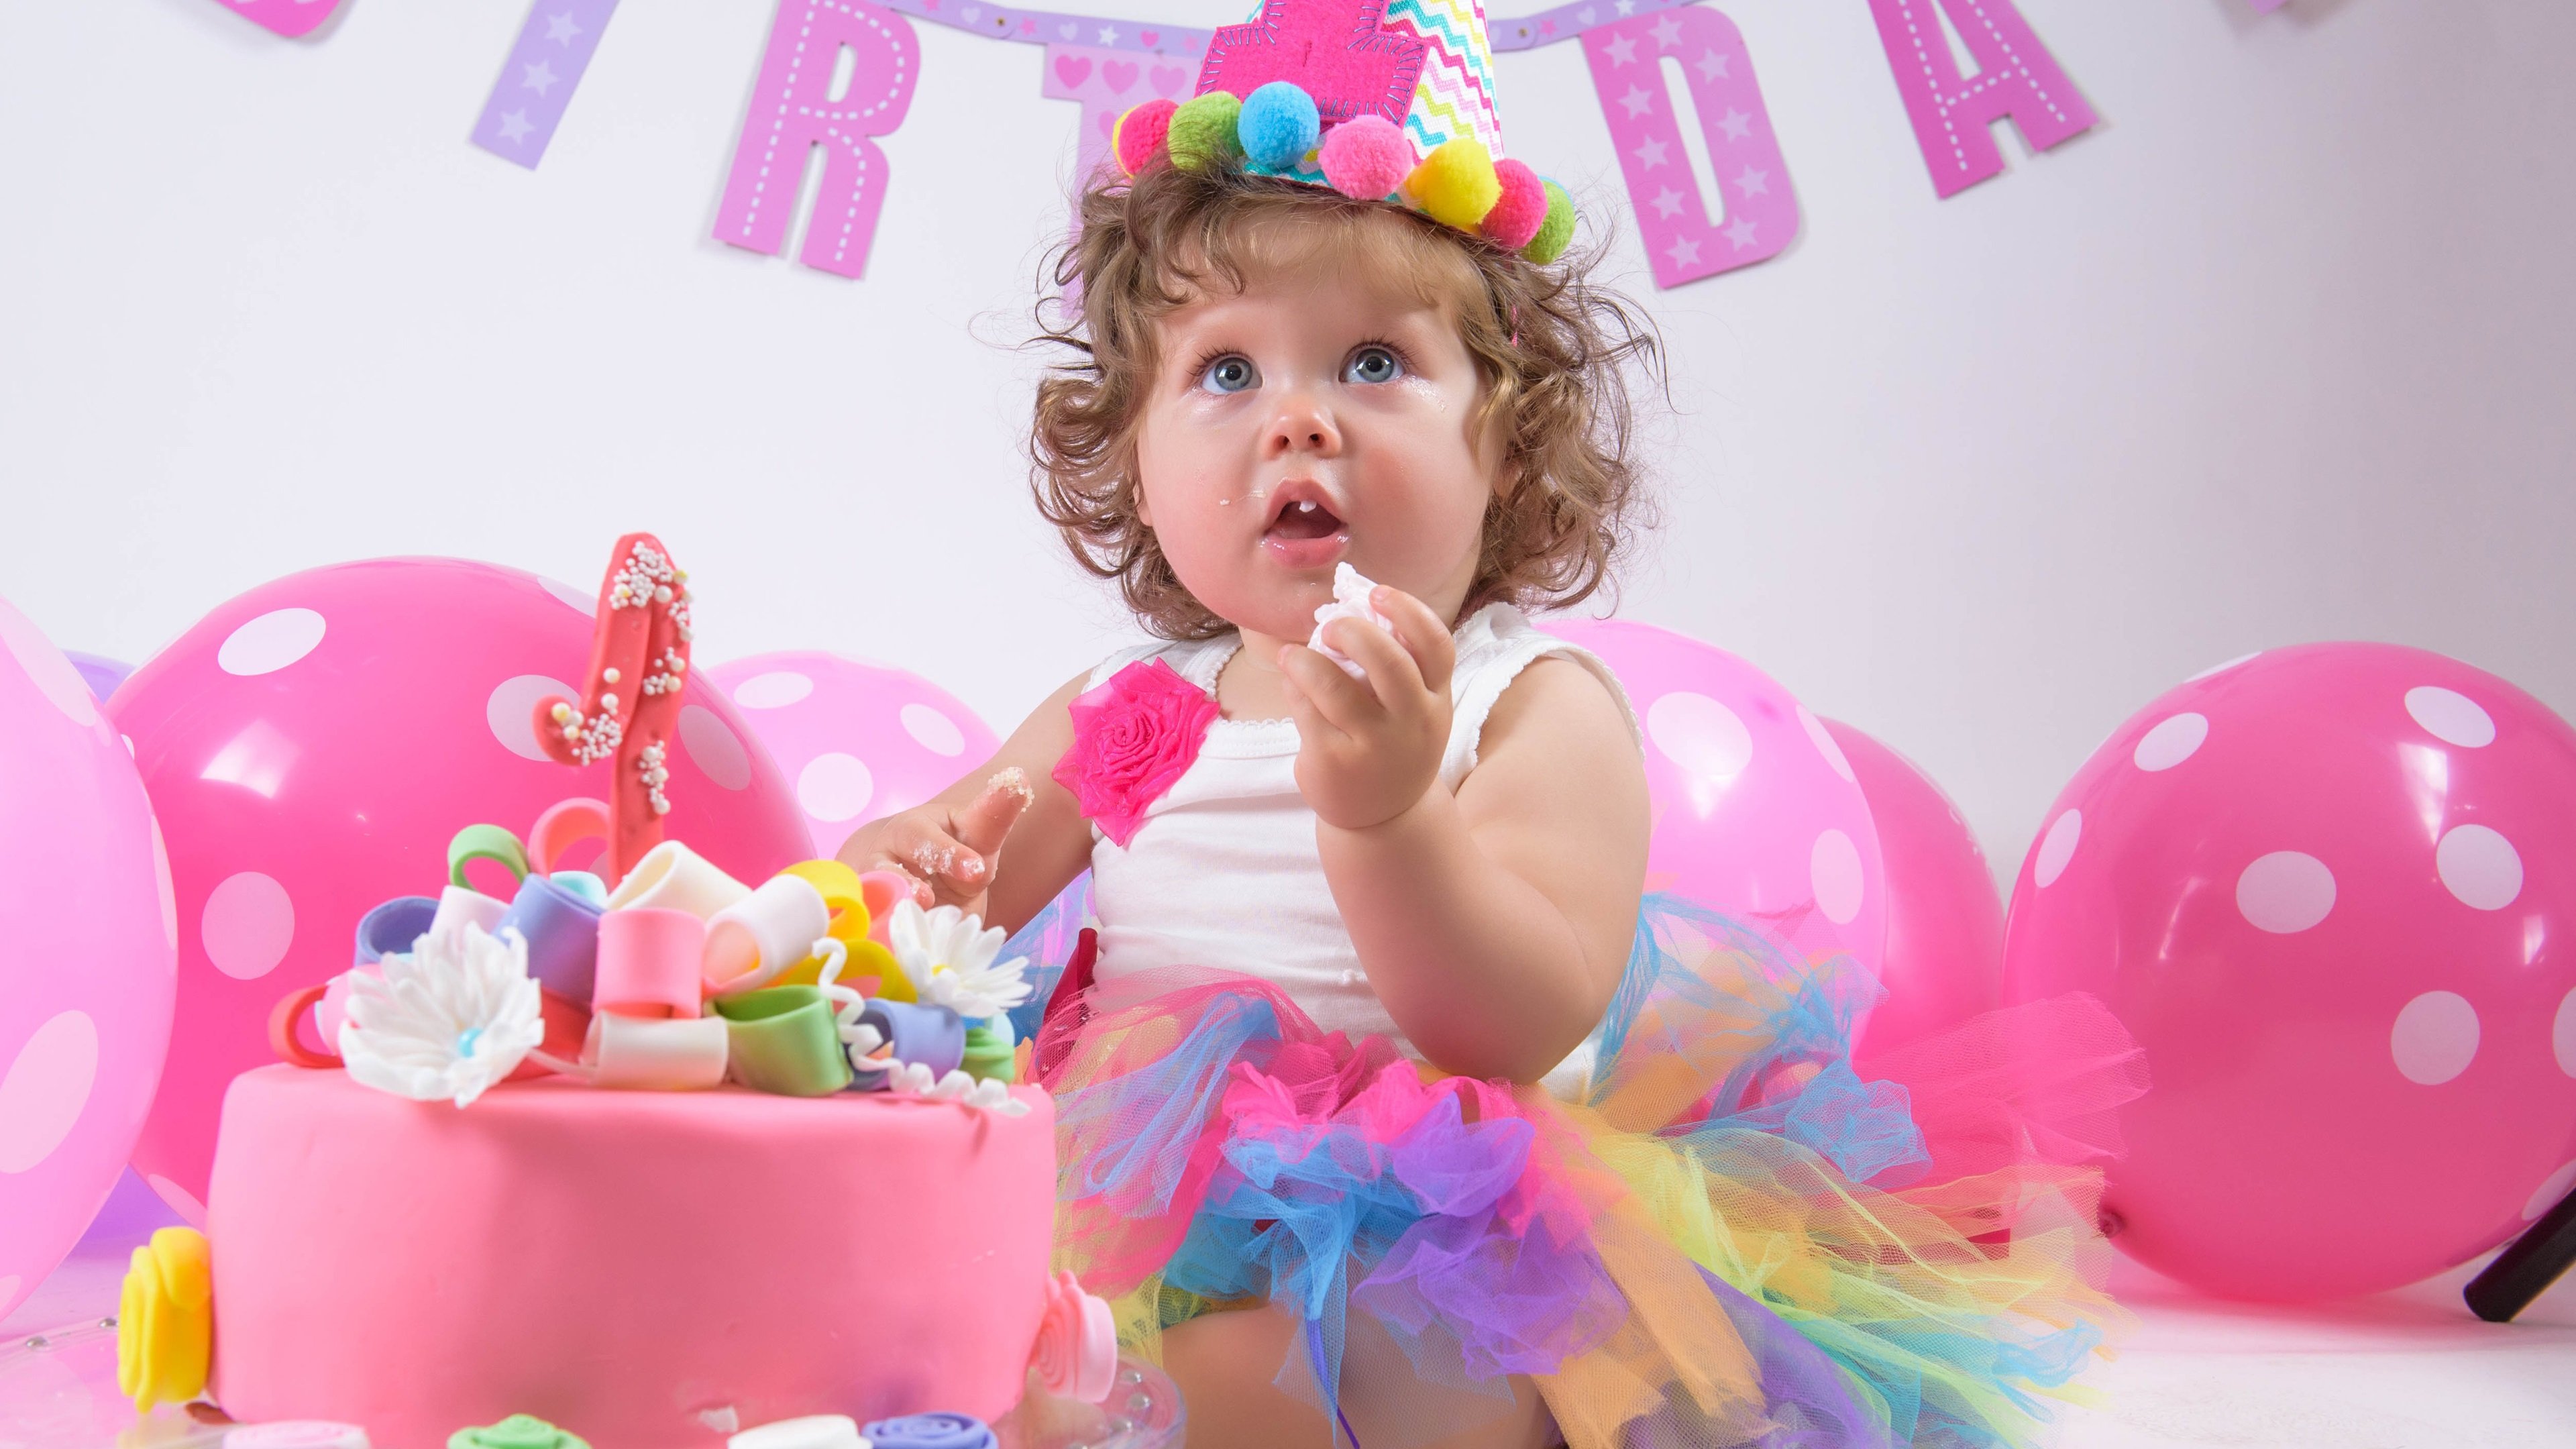 Wallpaper Happy Birthday, child girl, cake, balloons 3840x2160 UHD